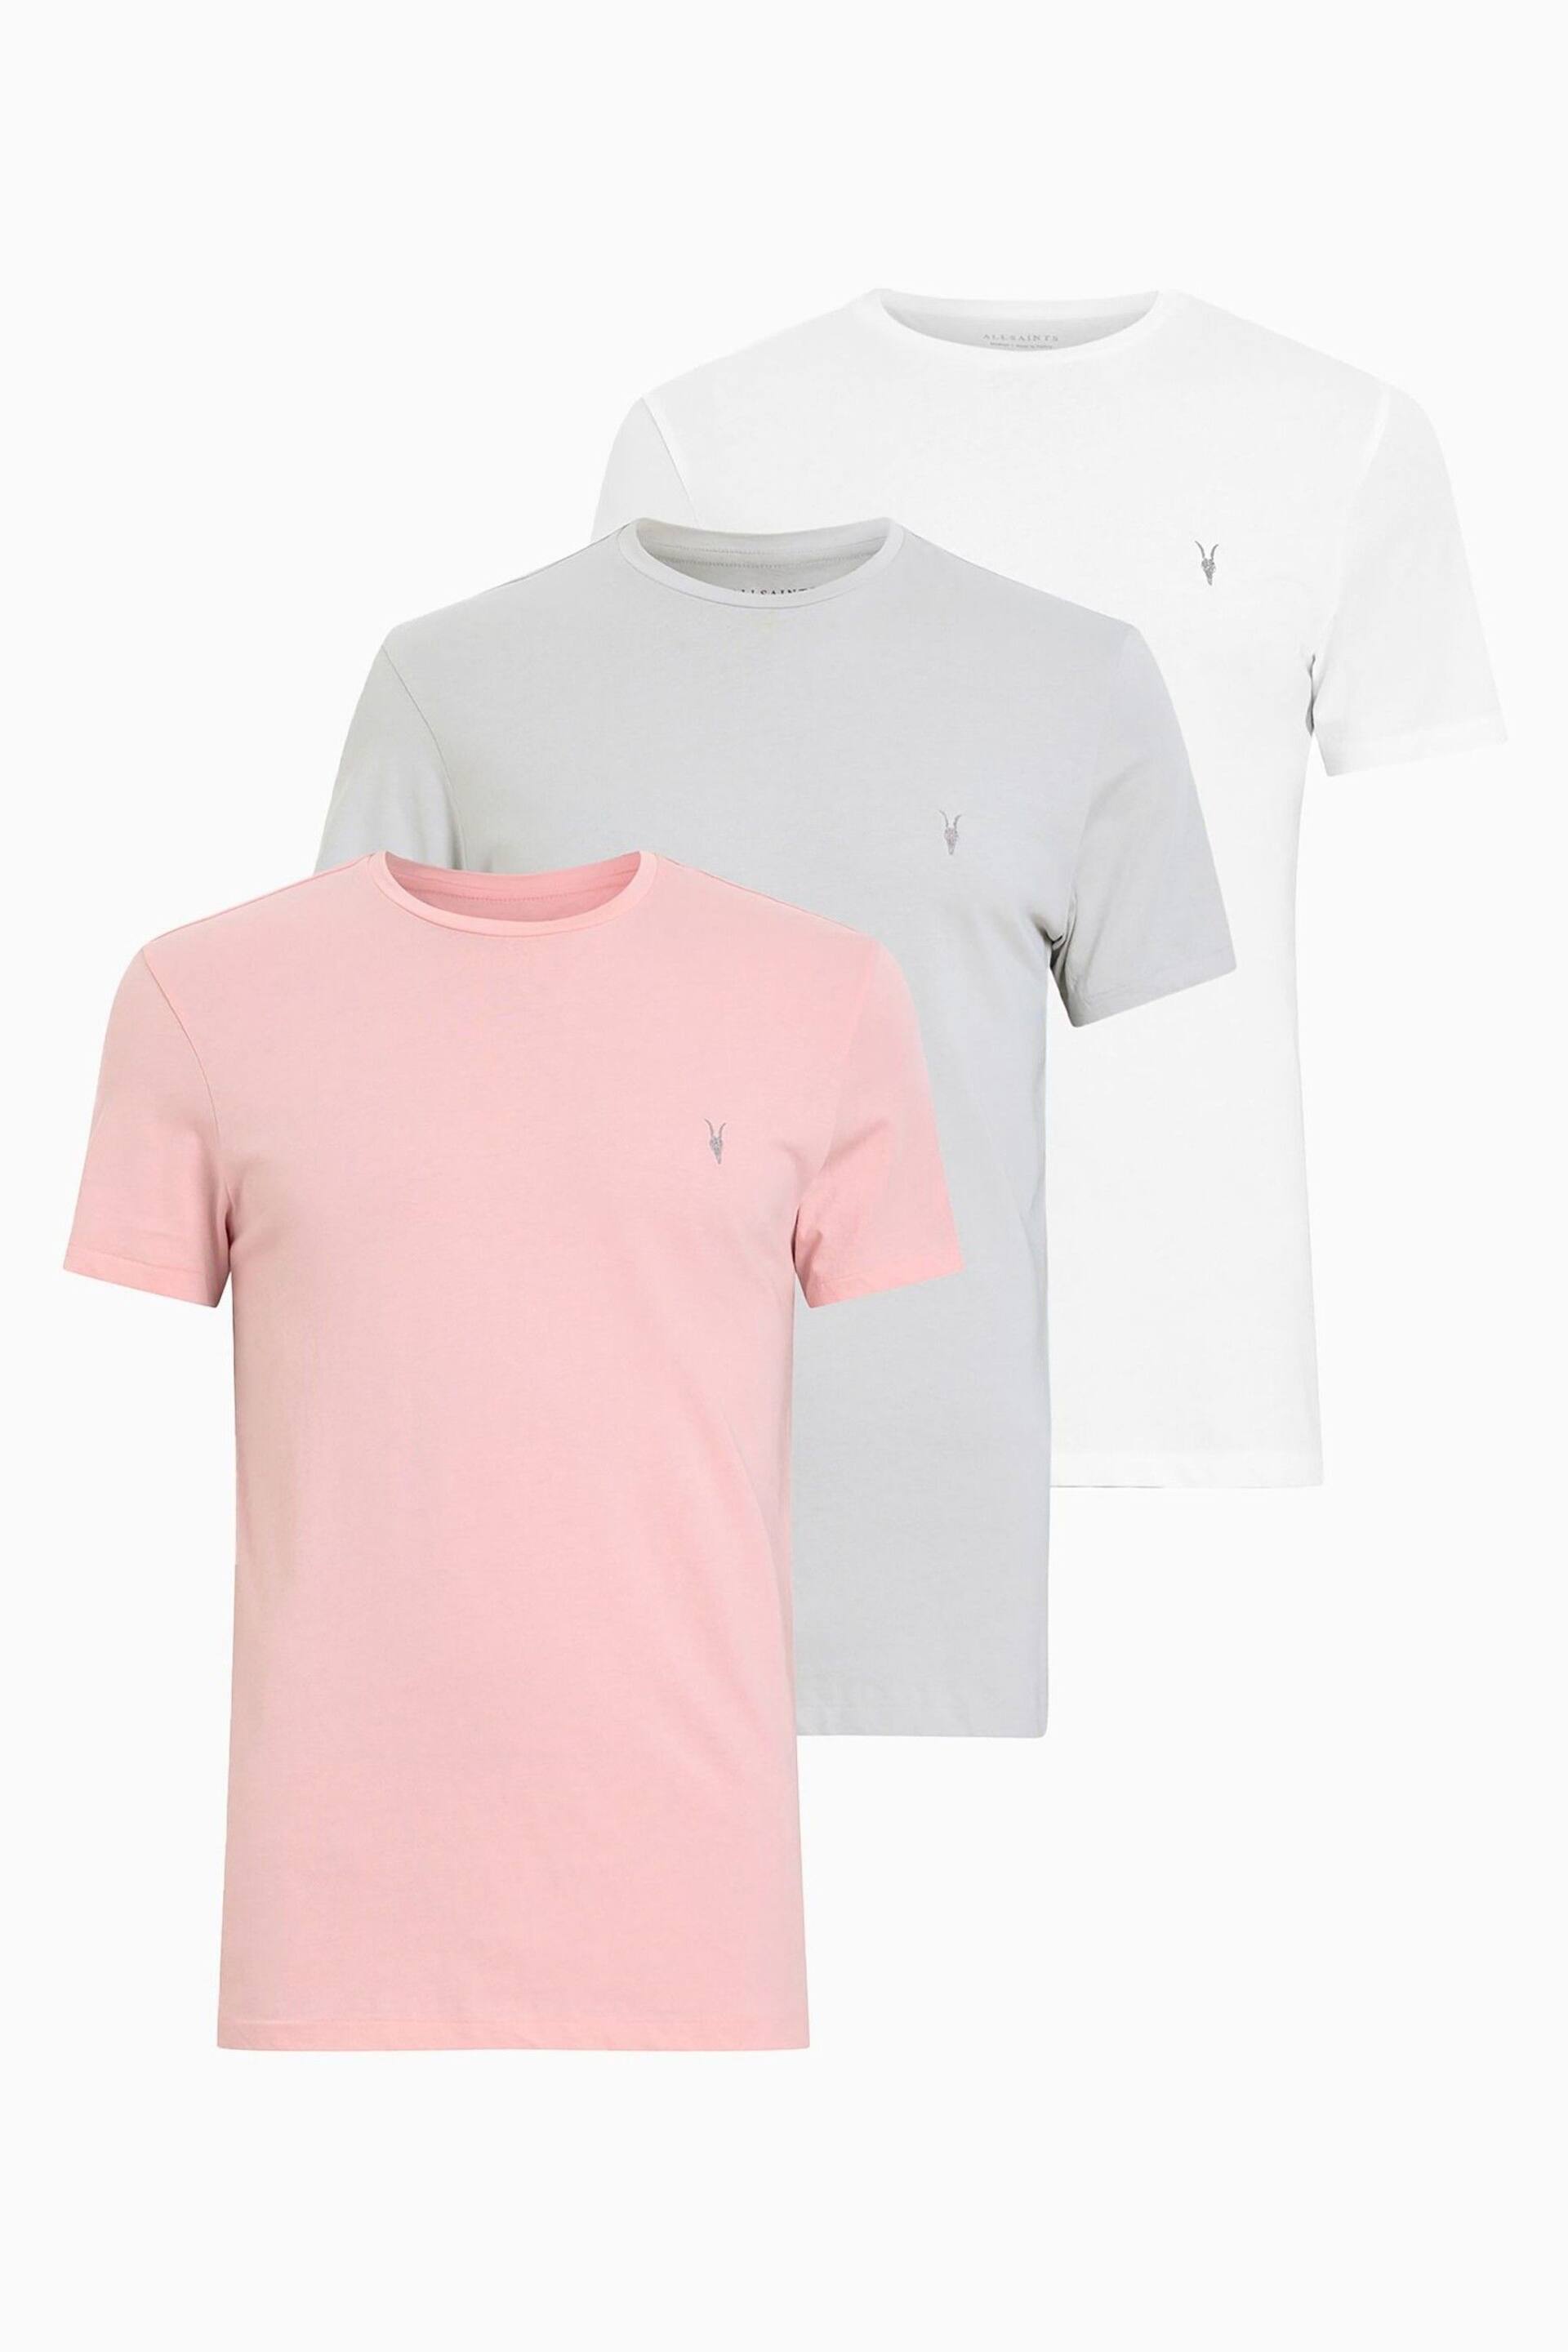 AllSaints Grey Tonic Short Sleeve Crew T-Shirt 3 Pack - Image 1 of 8